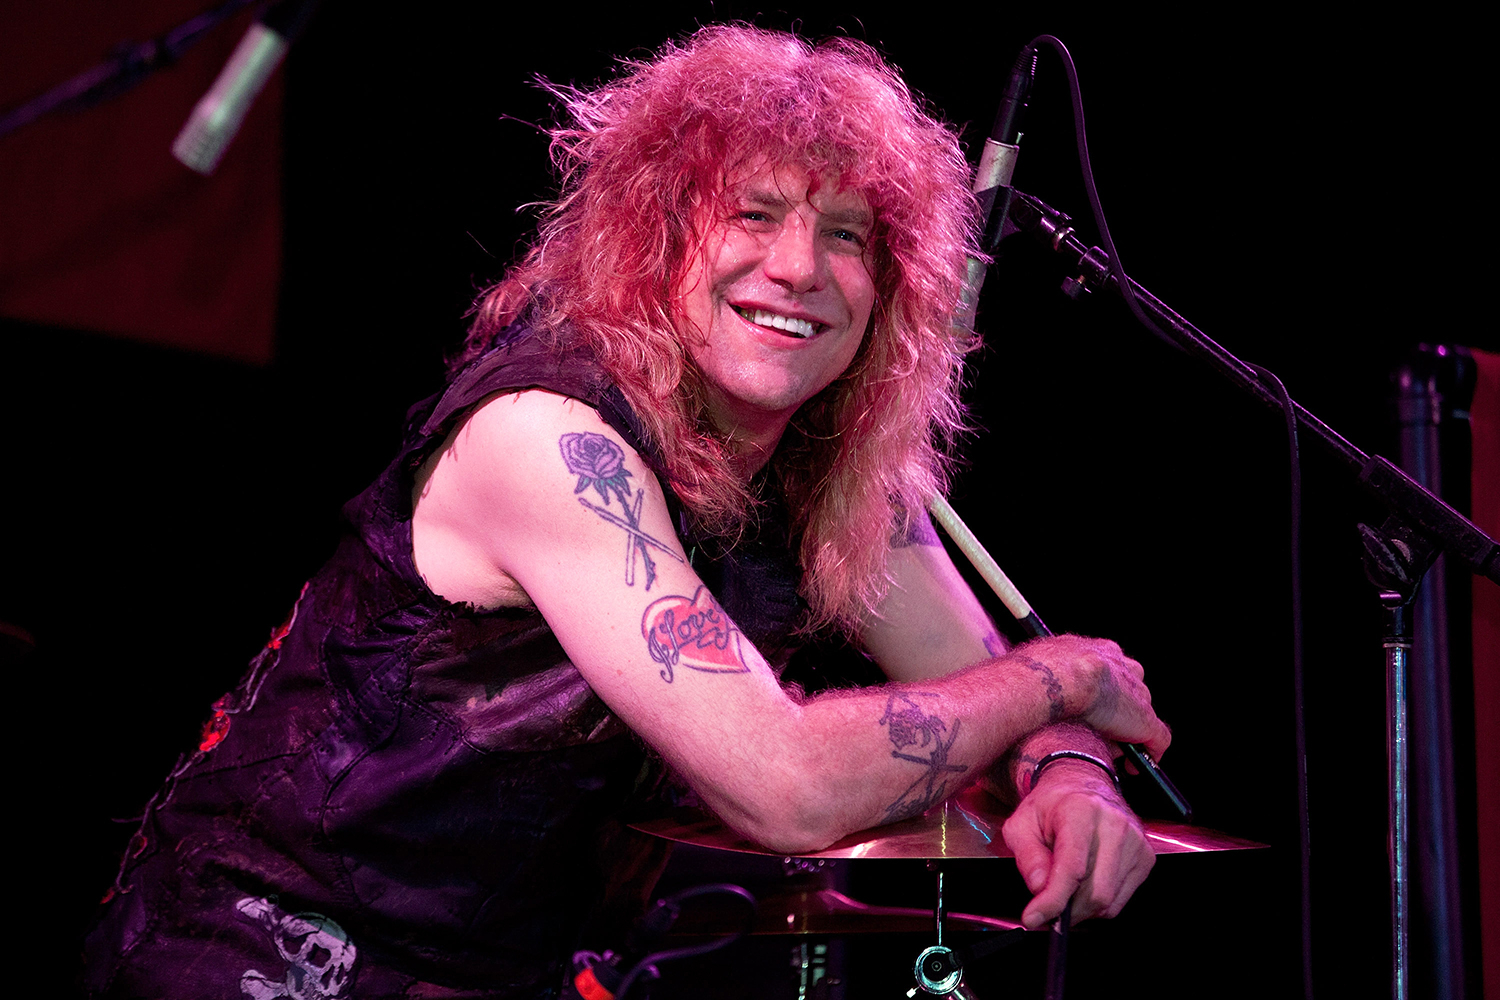 Waarom verliet Steve Adler Guns N' Roses?